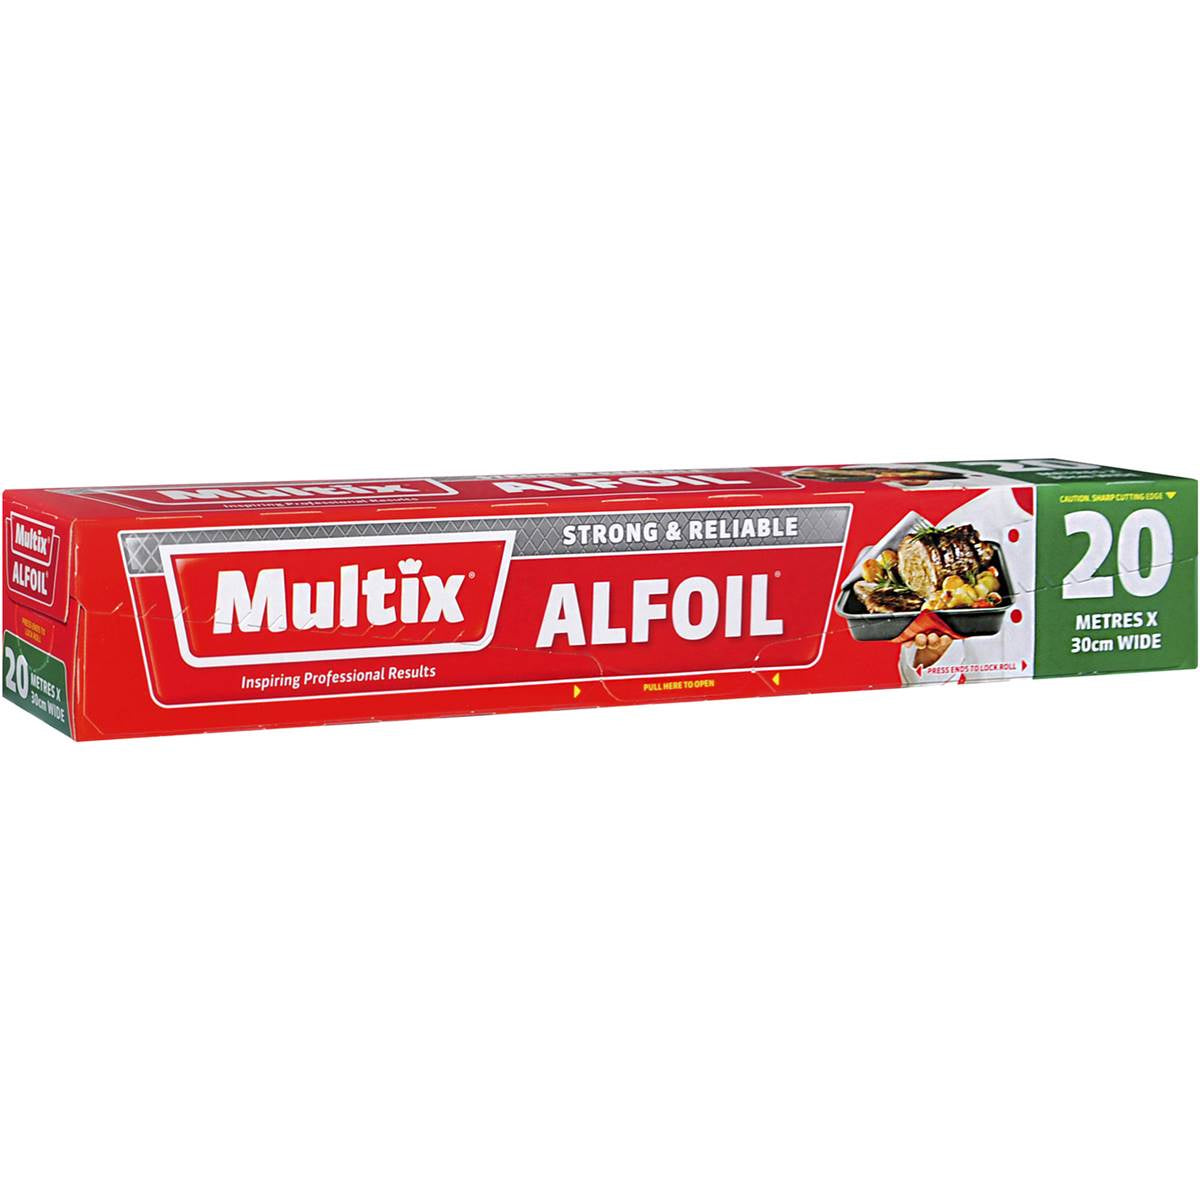 Multix Alfoil 30cm x 20m